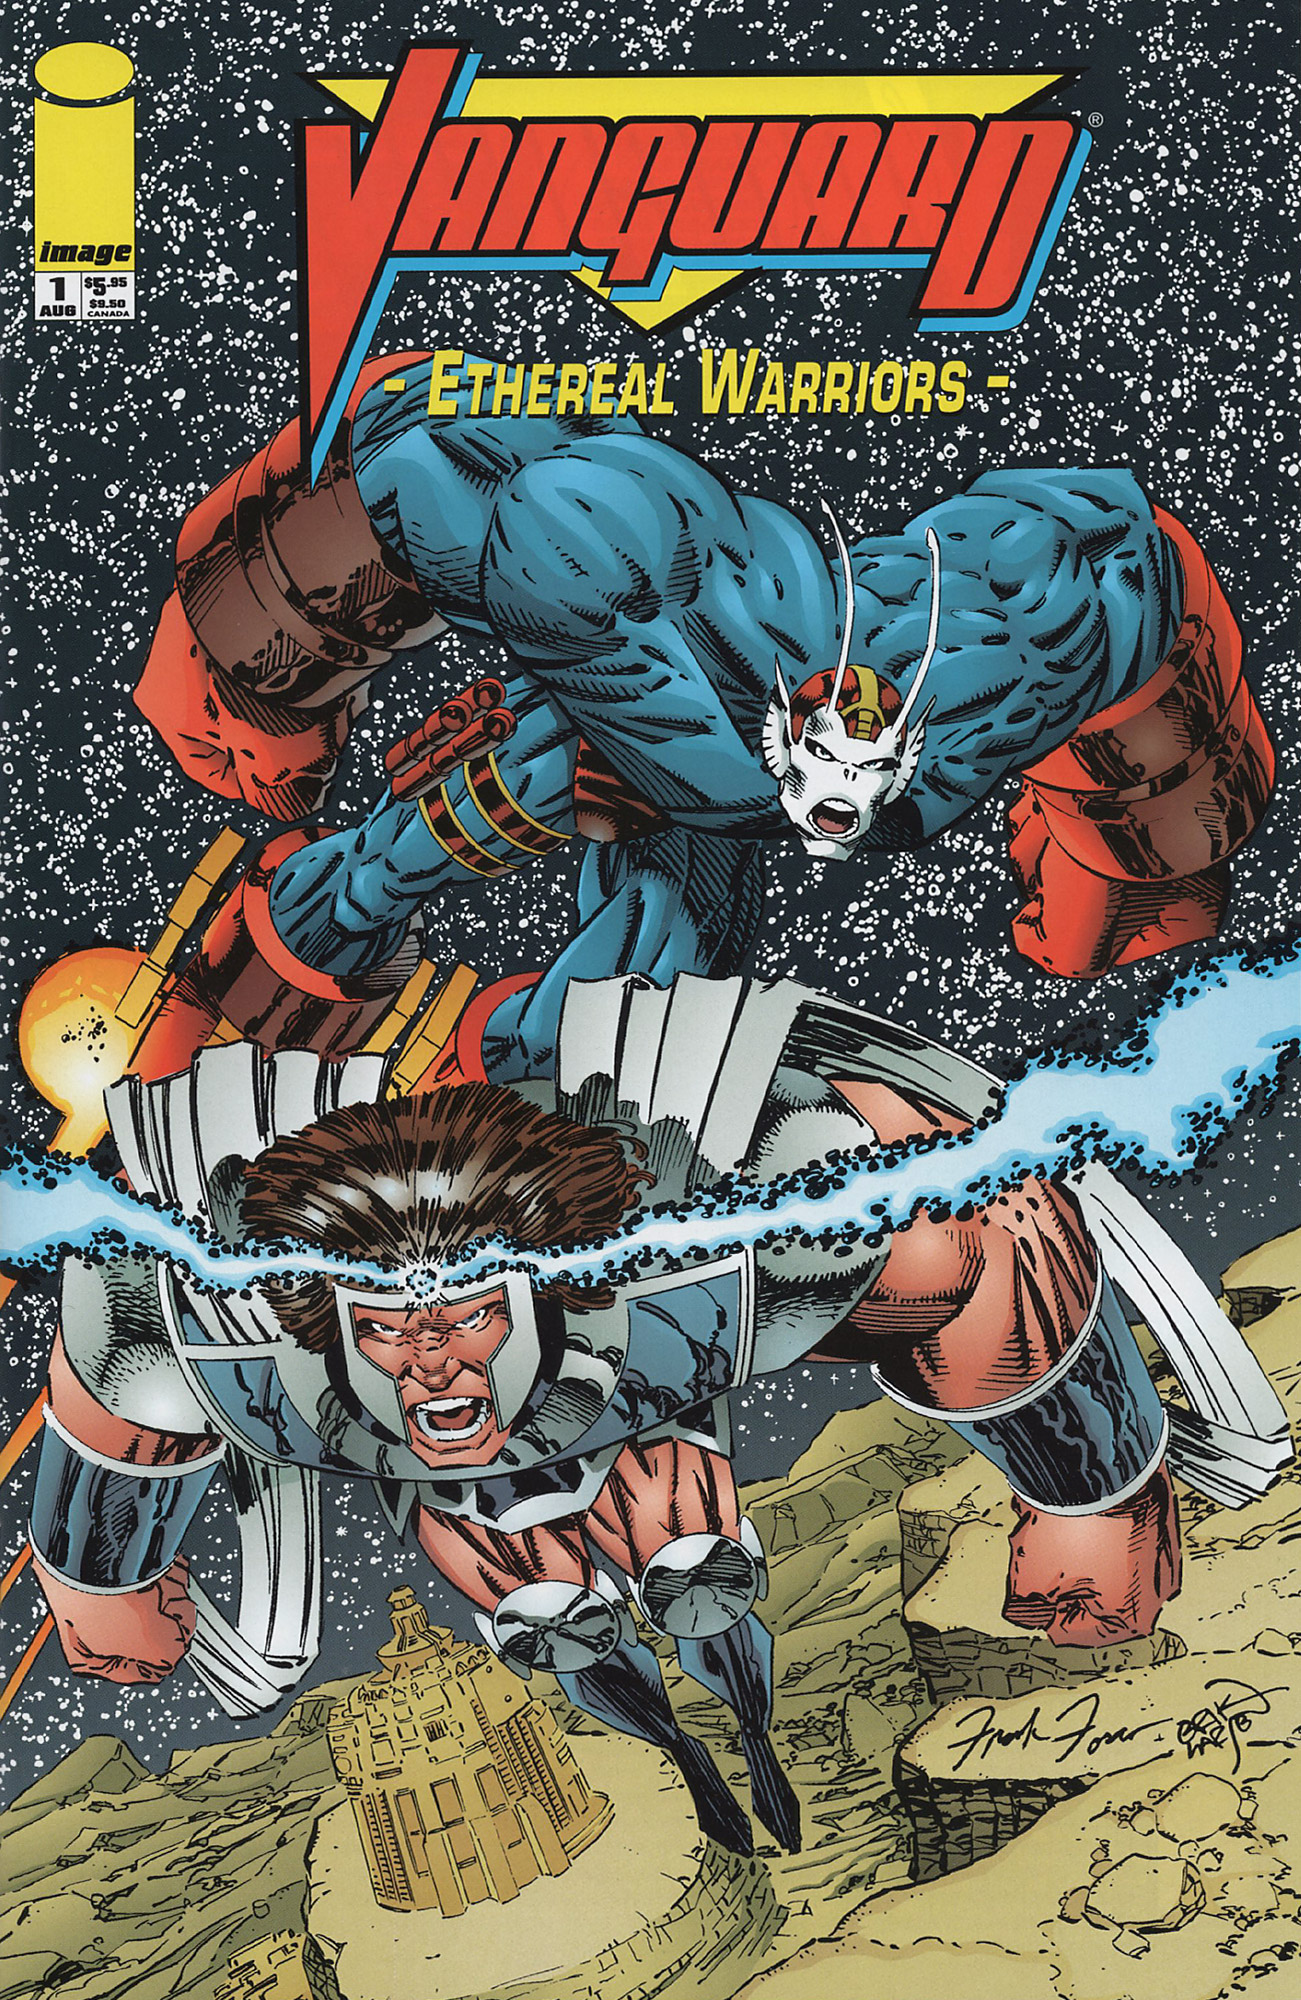 Cover Vanguard Ethereal Warriors